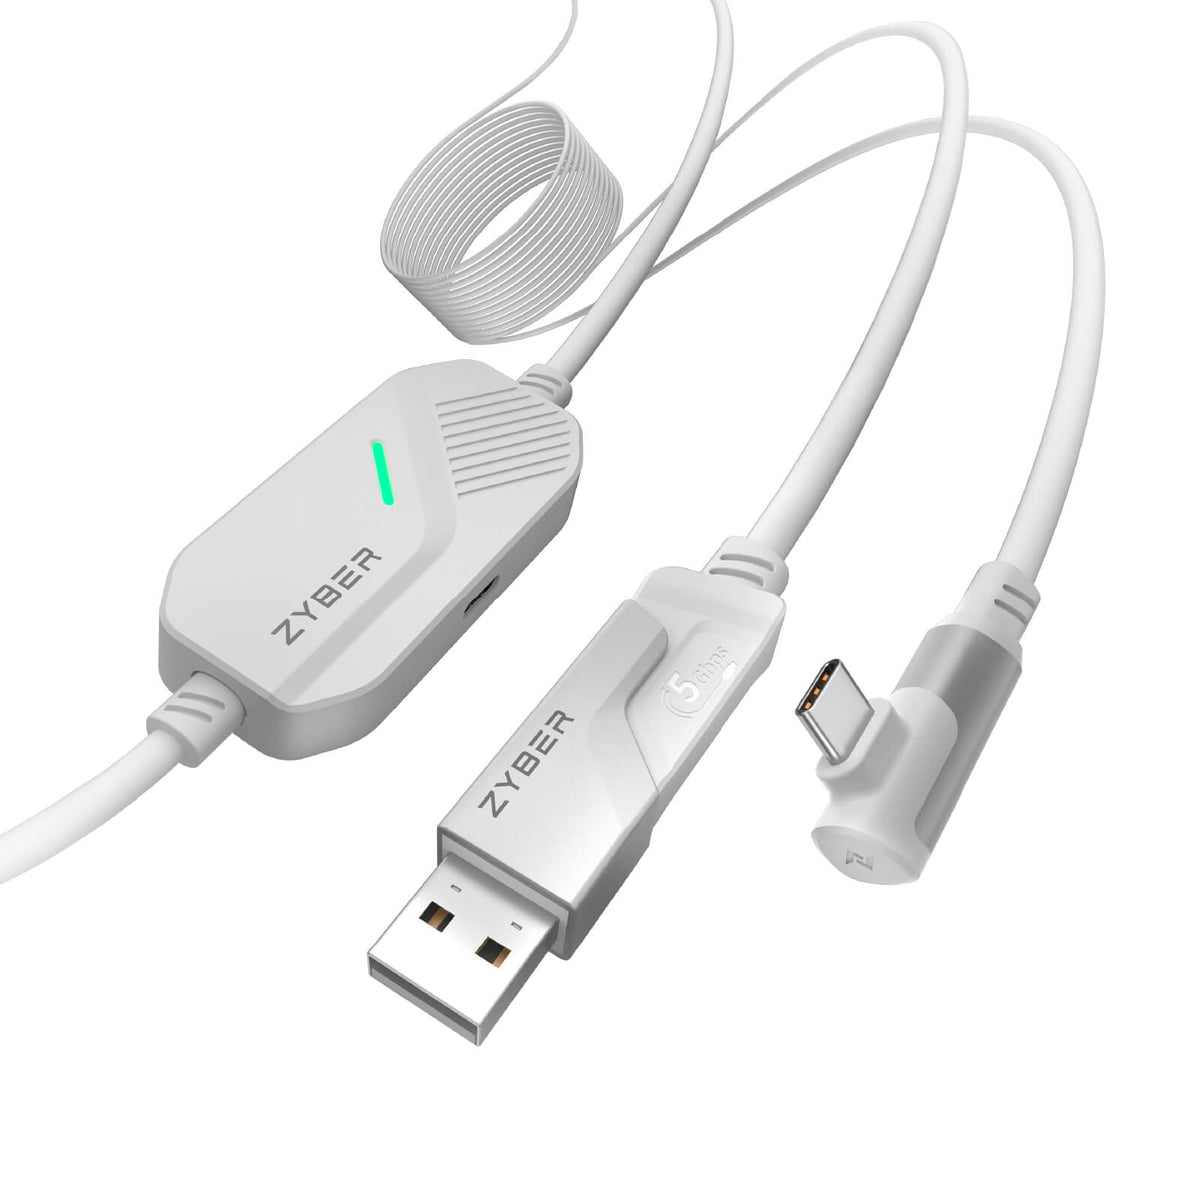 Cable de carga y transmisión ZyberVR USB-A/C a USB-C